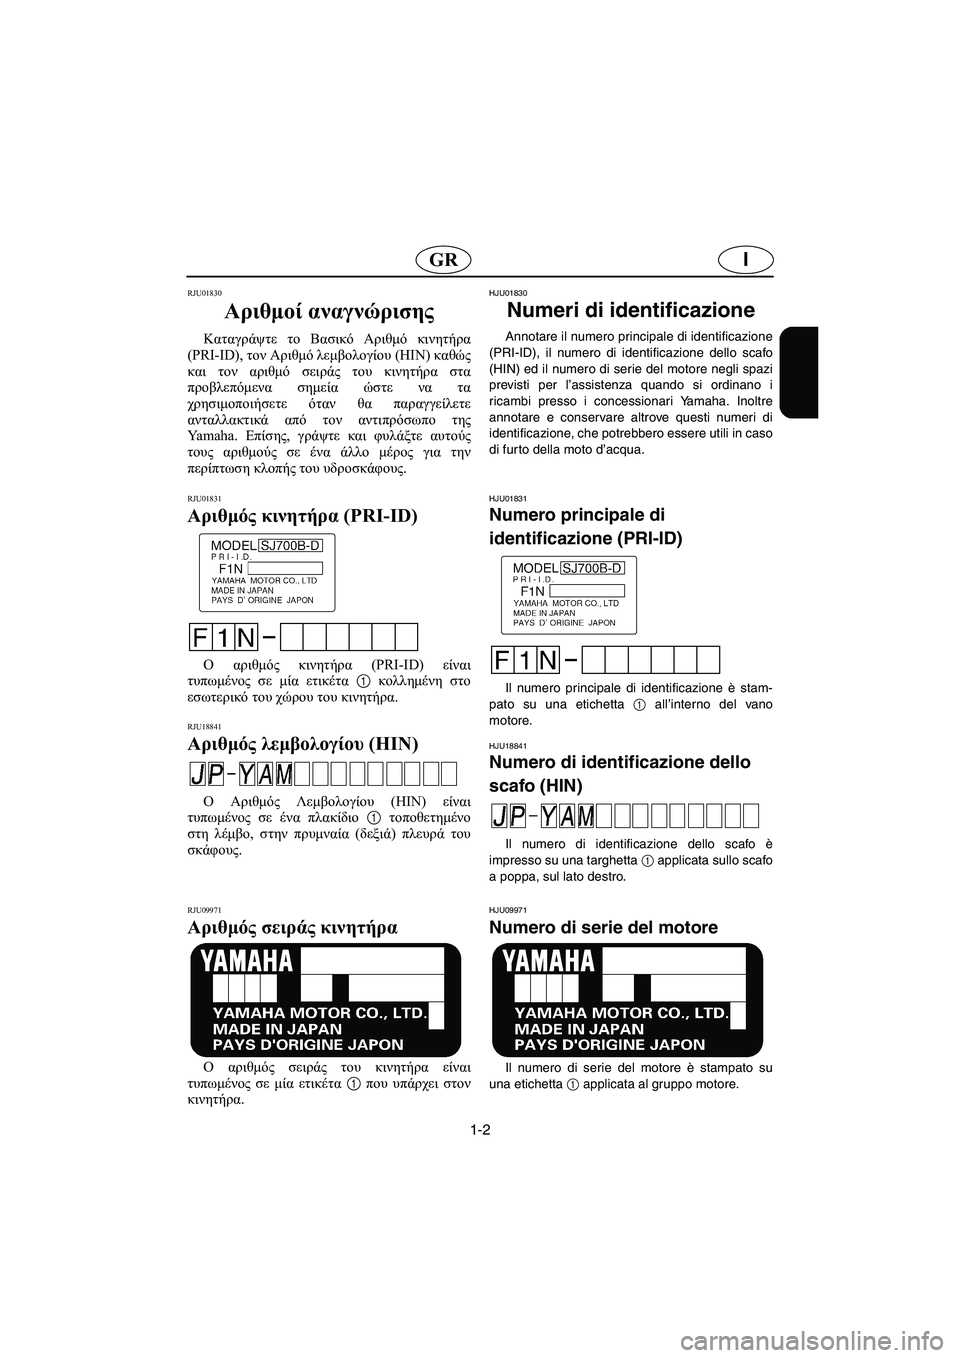 YAMAHA SUPERJET 2005  Manual de utilização (in Portuguese) 1-2
IGR
RJU01830 
Αριθμοί αναγνώρισης  
Καταγράψτε το Βασικό Αριθμό κινητήρα
(PRI-ID), τον Αριθμό λεμβολογίου (HIN) καθώς
κ�